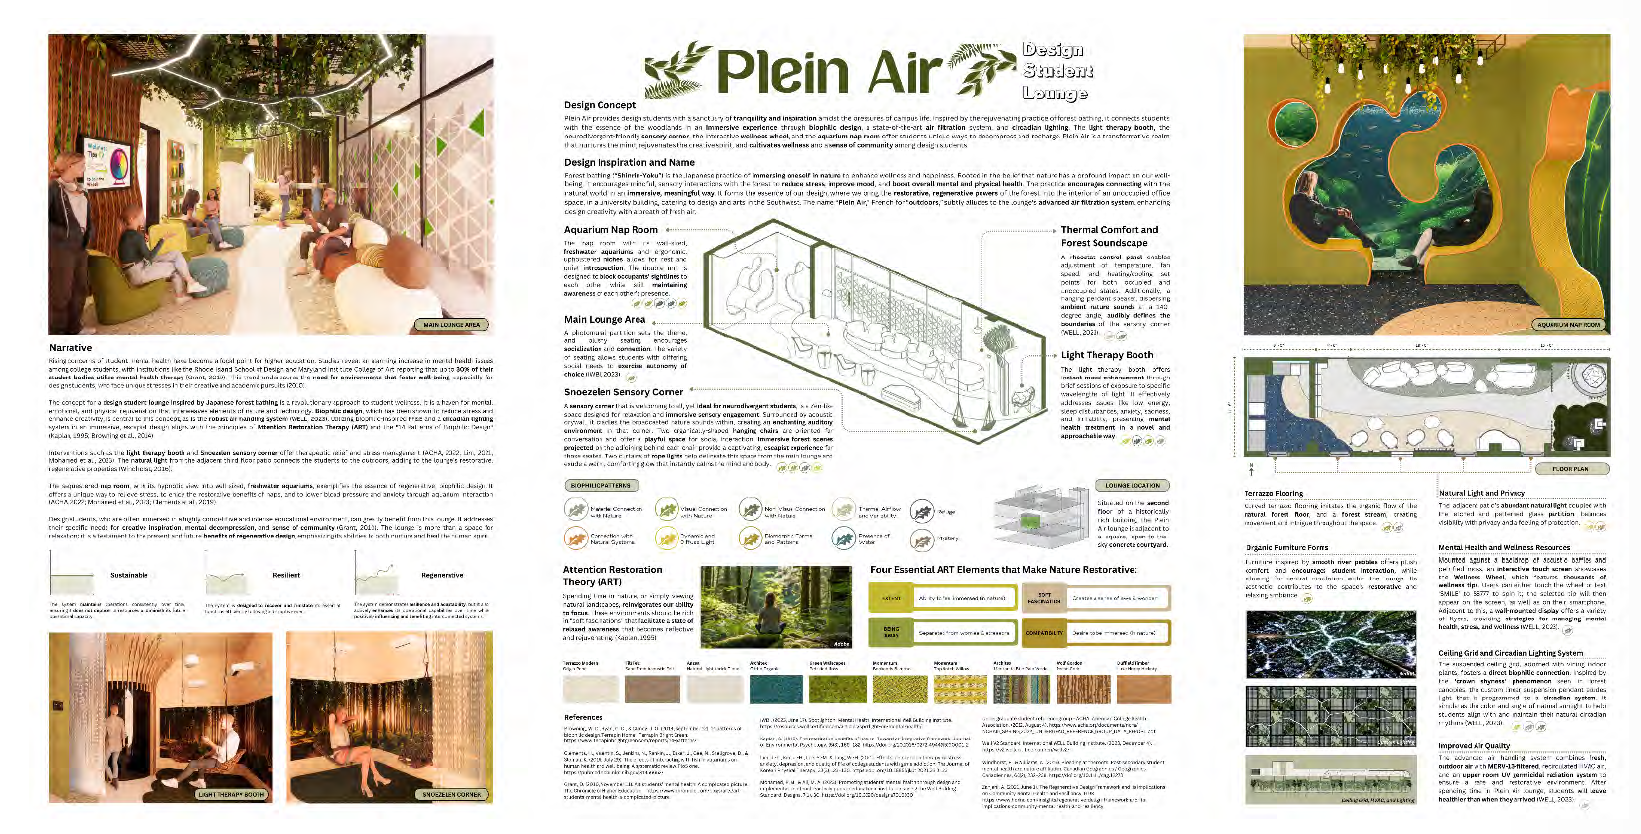 Plein Air student lounge design plan.